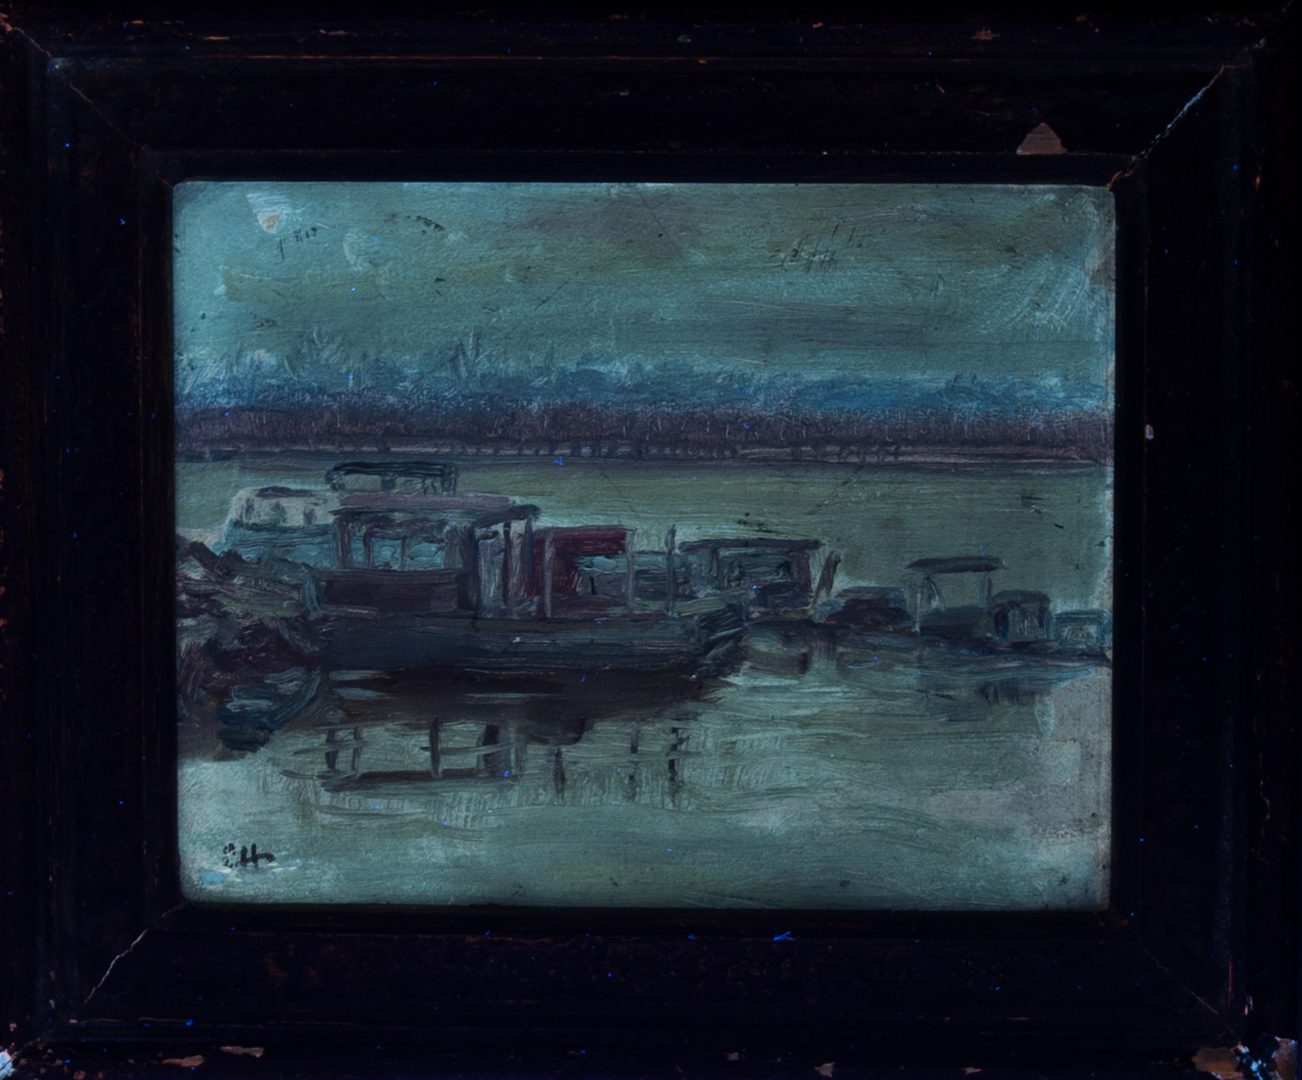 Lot 186: Cornelius Hankins Memphis Barge Painting